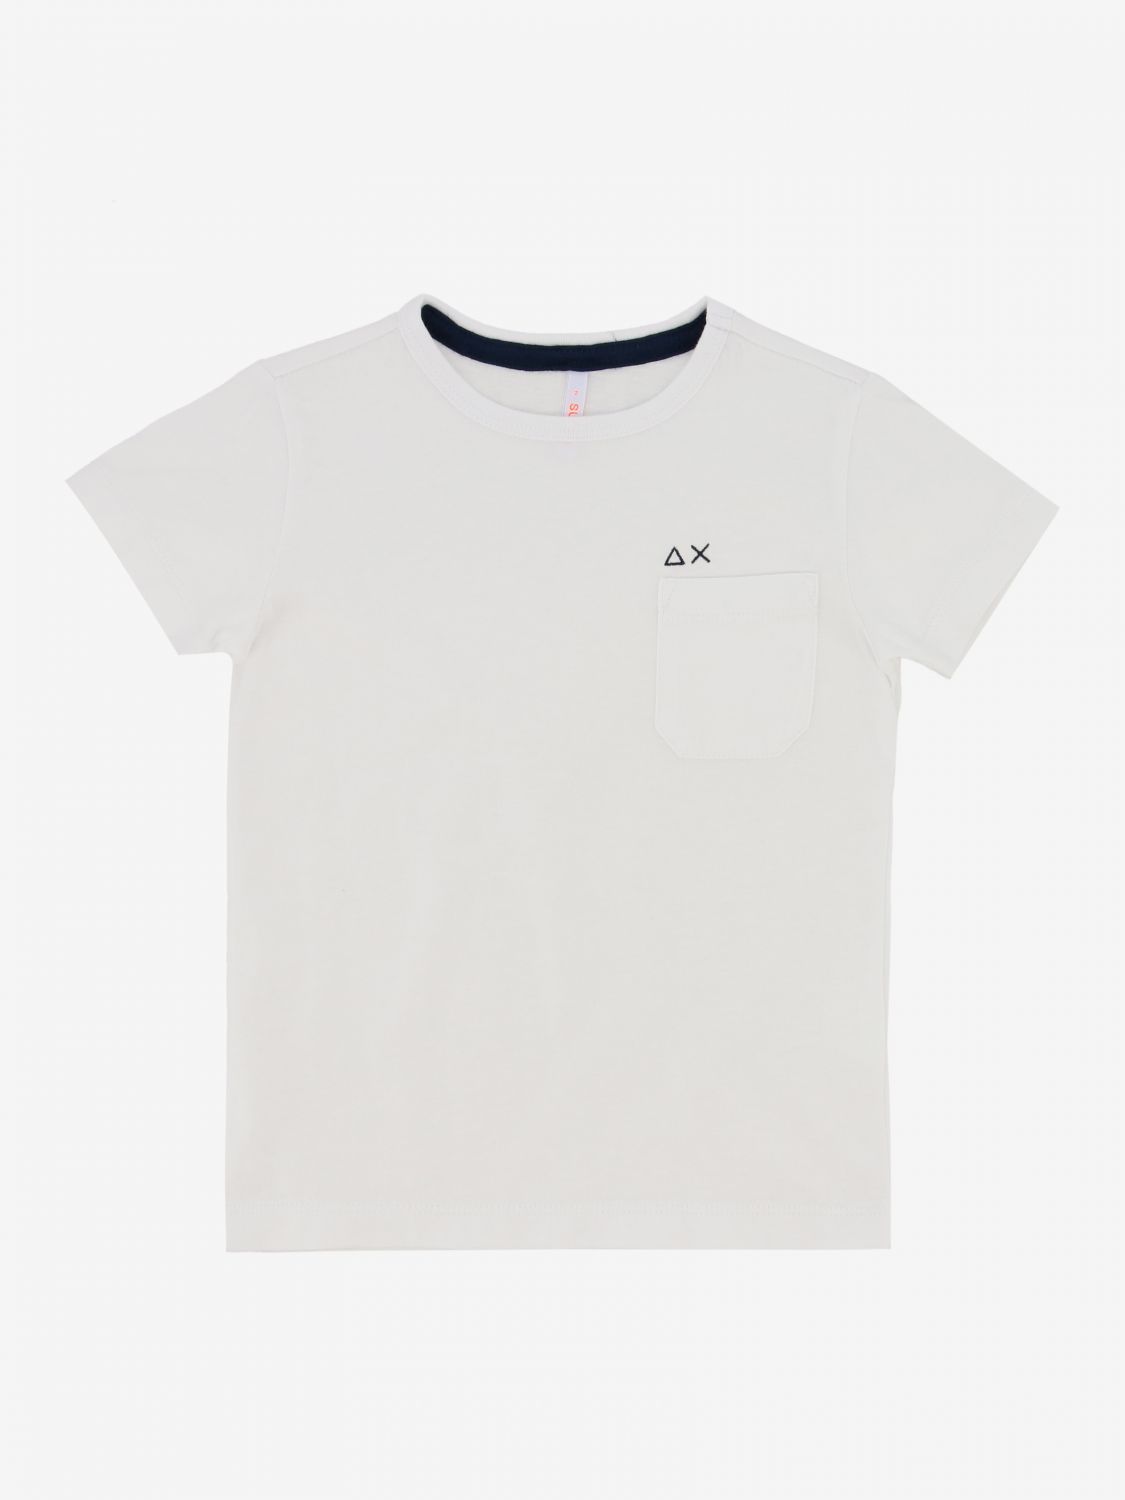 Short-sleeved Sun 68 t-shirt with logo 